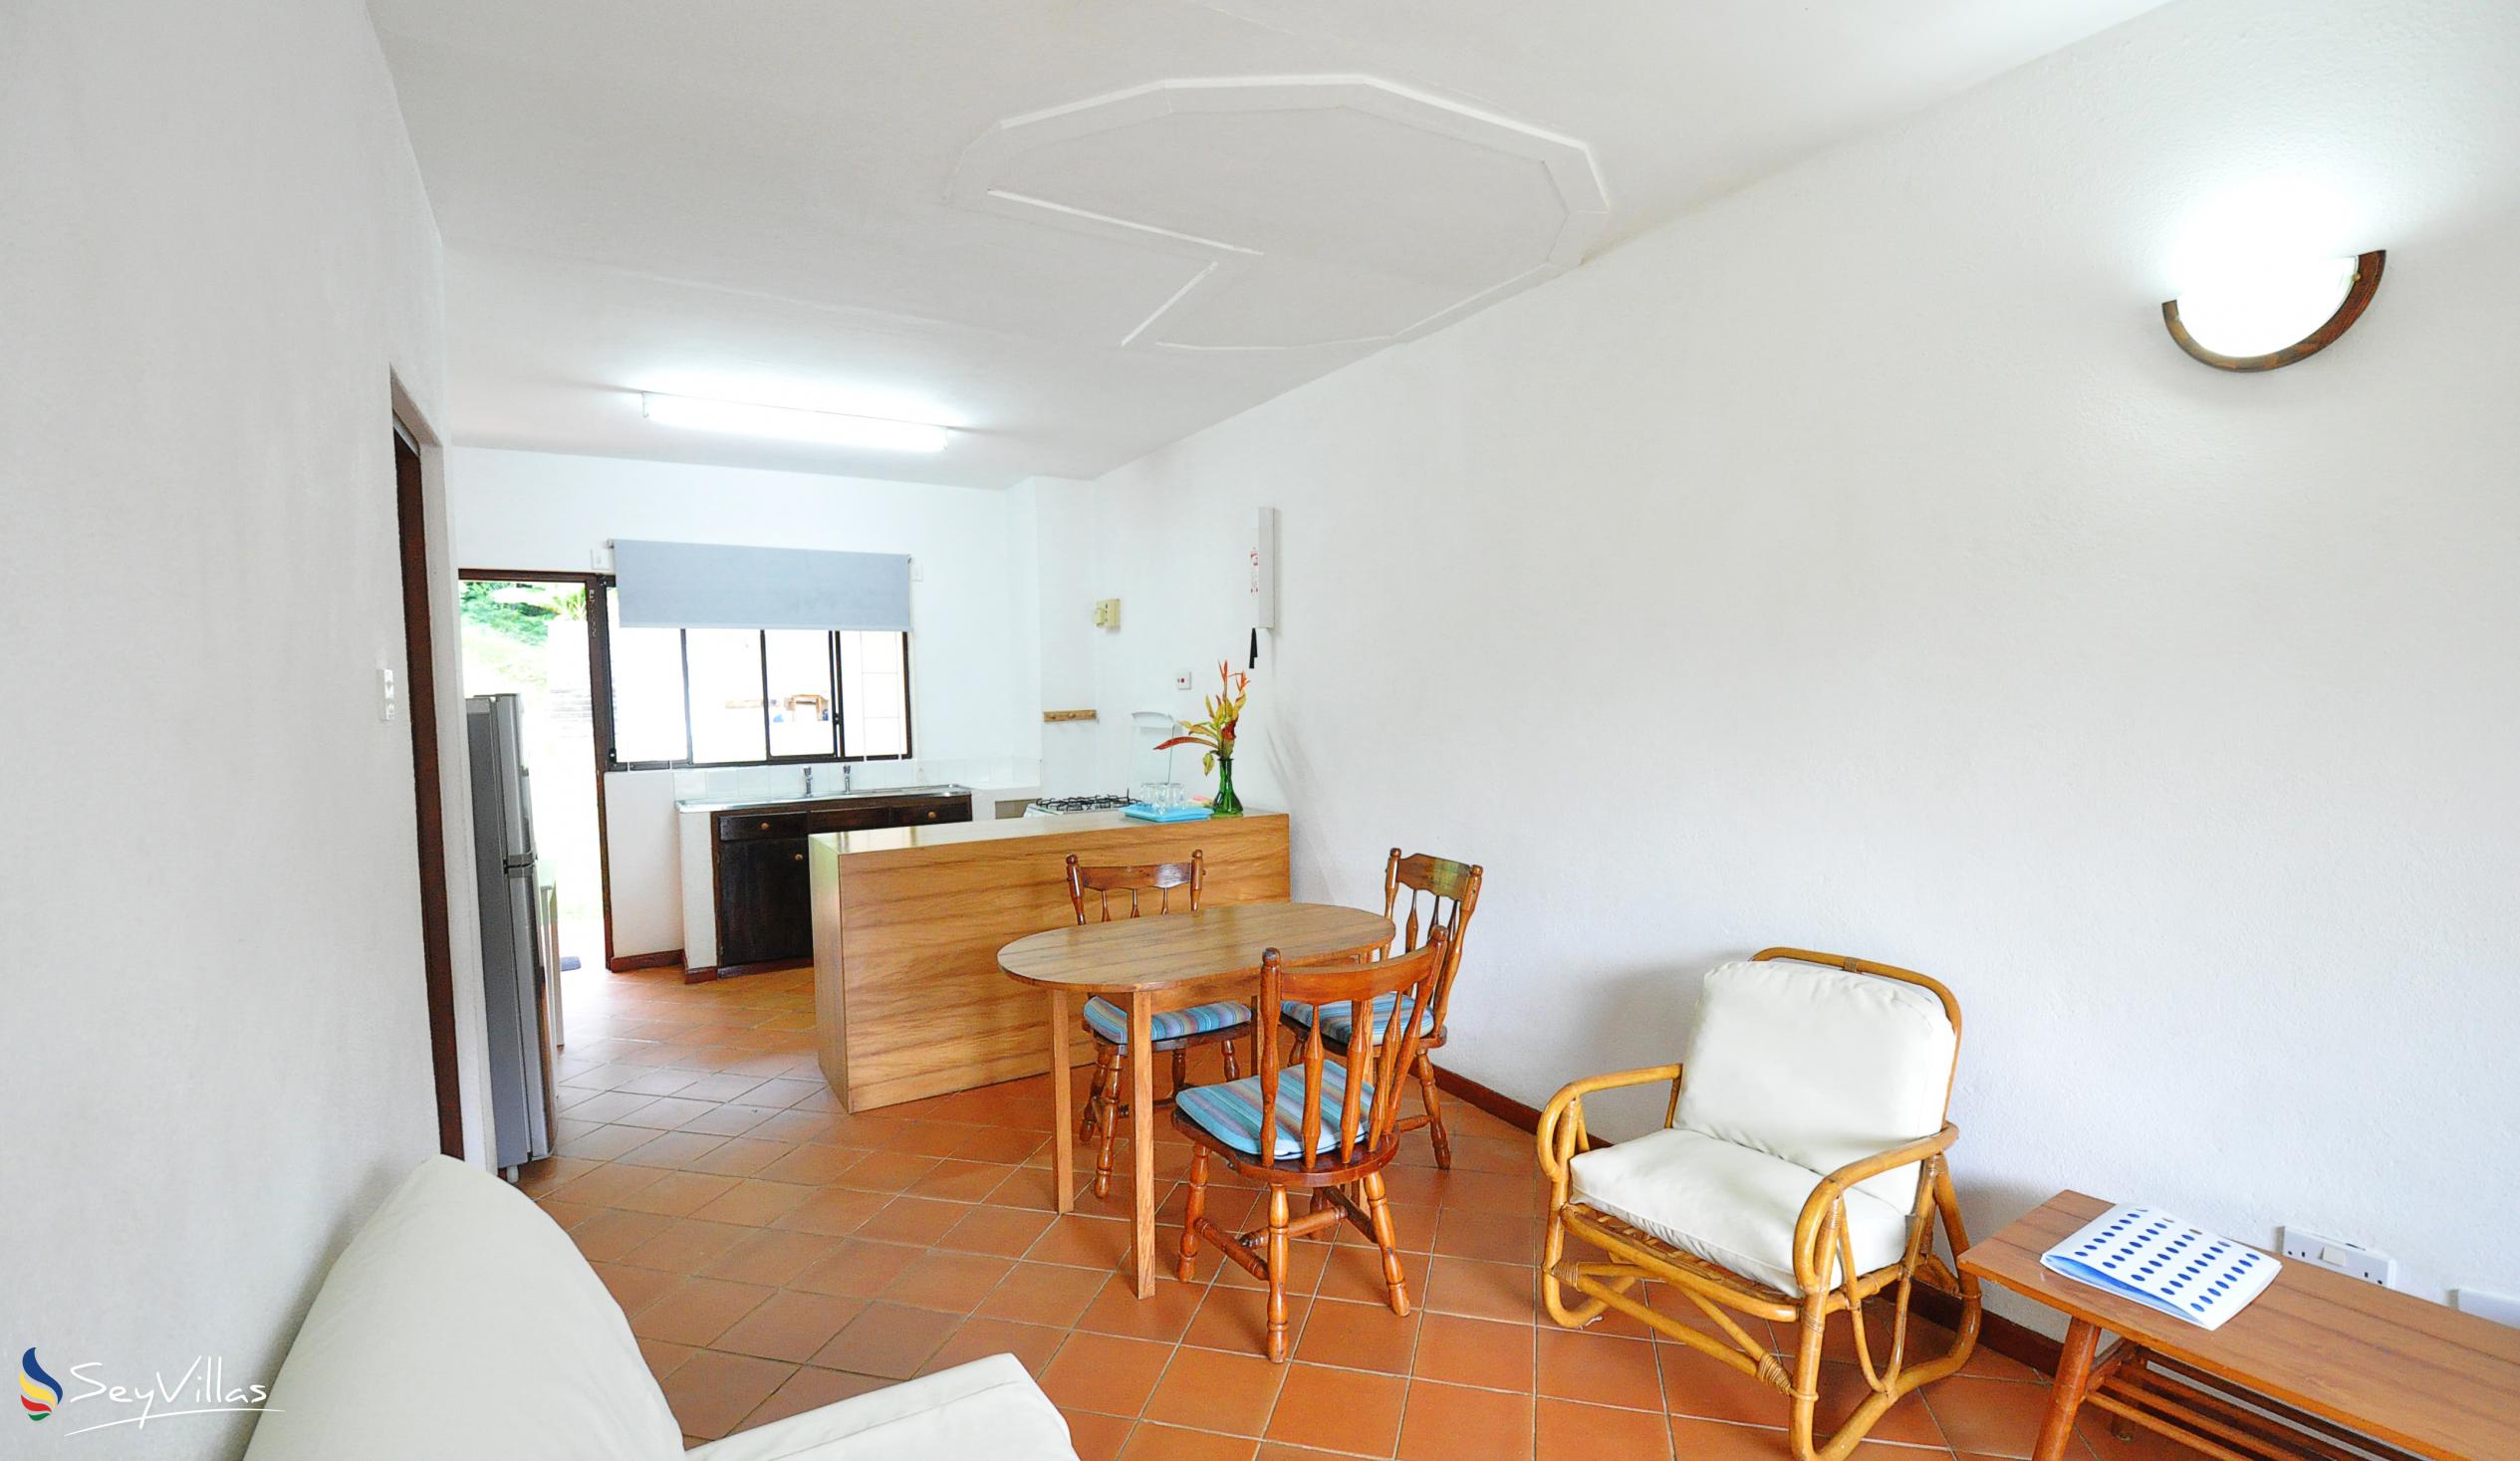 Photo 19: La Résidence - Apartment Ground Floor - Mahé (Seychelles)